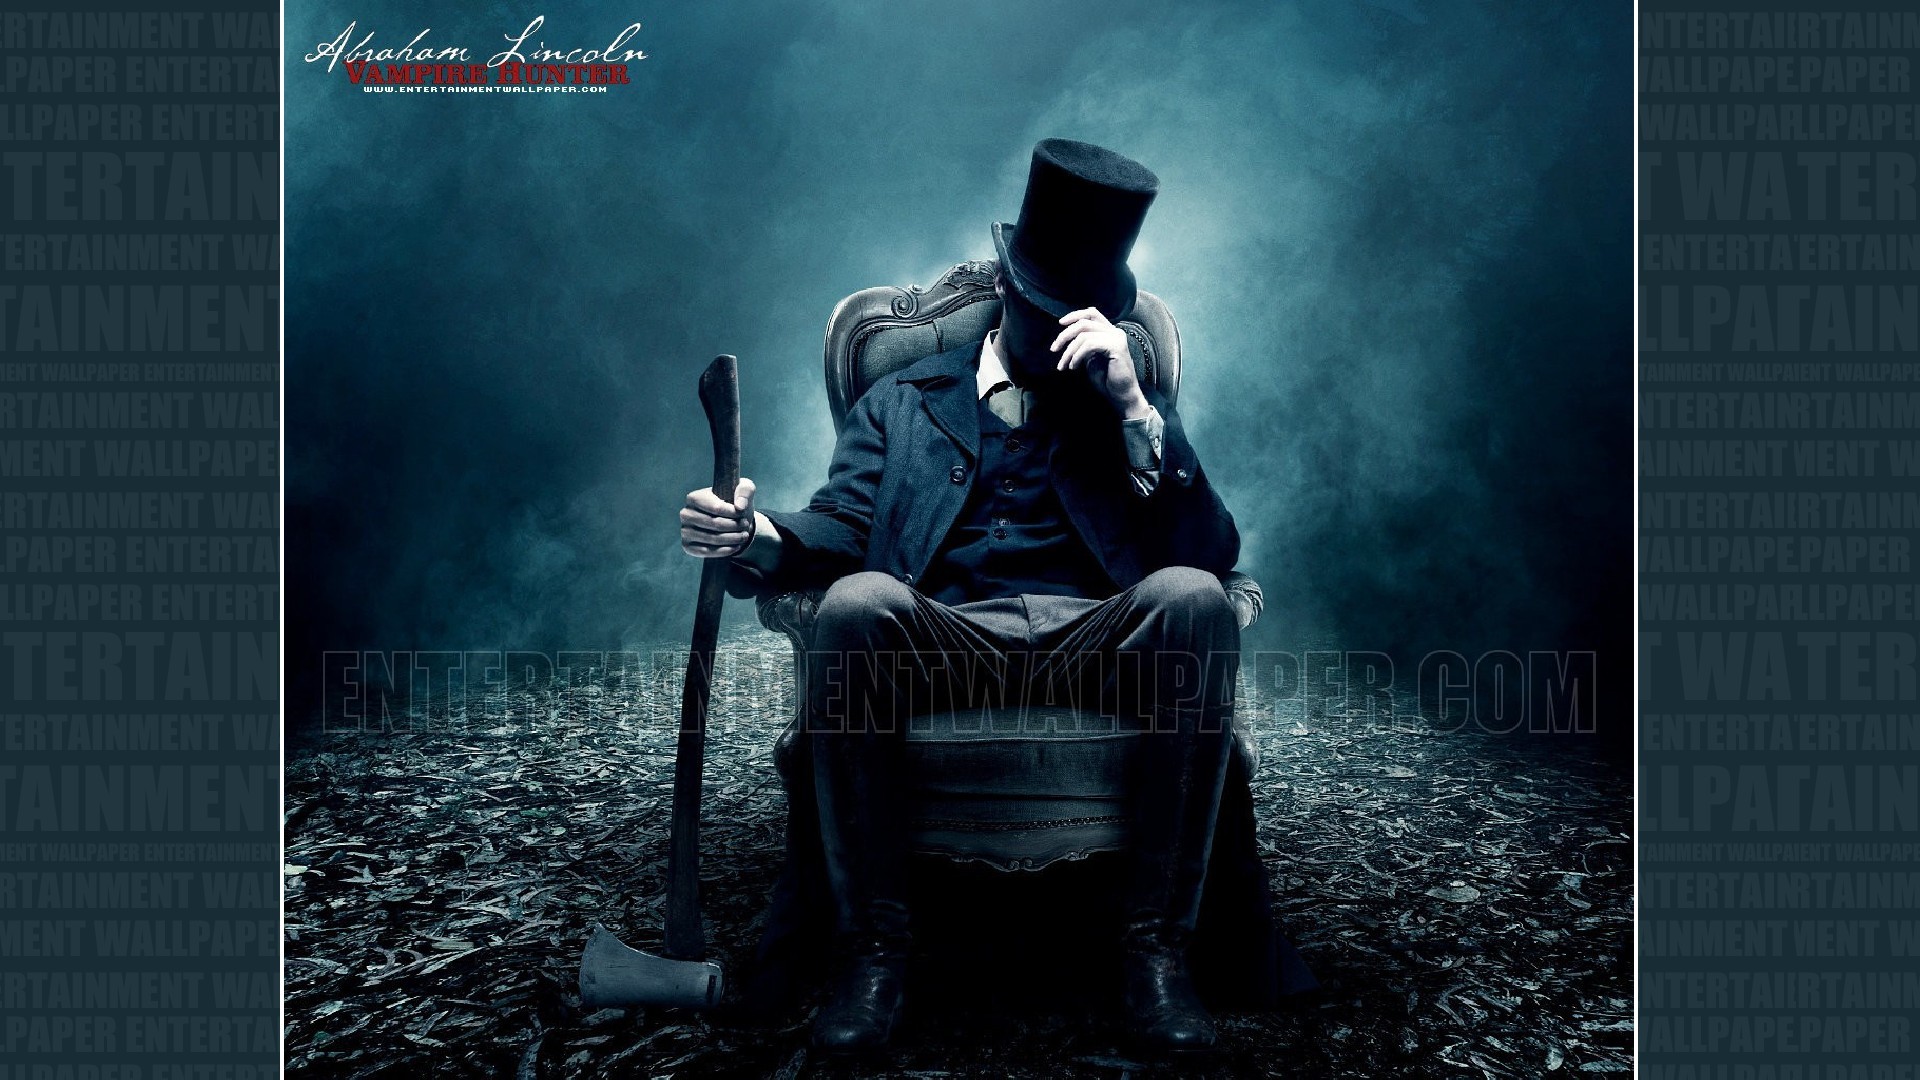 Abraham Lincoln Vampire Hunter Cover - HD Wallpaper 